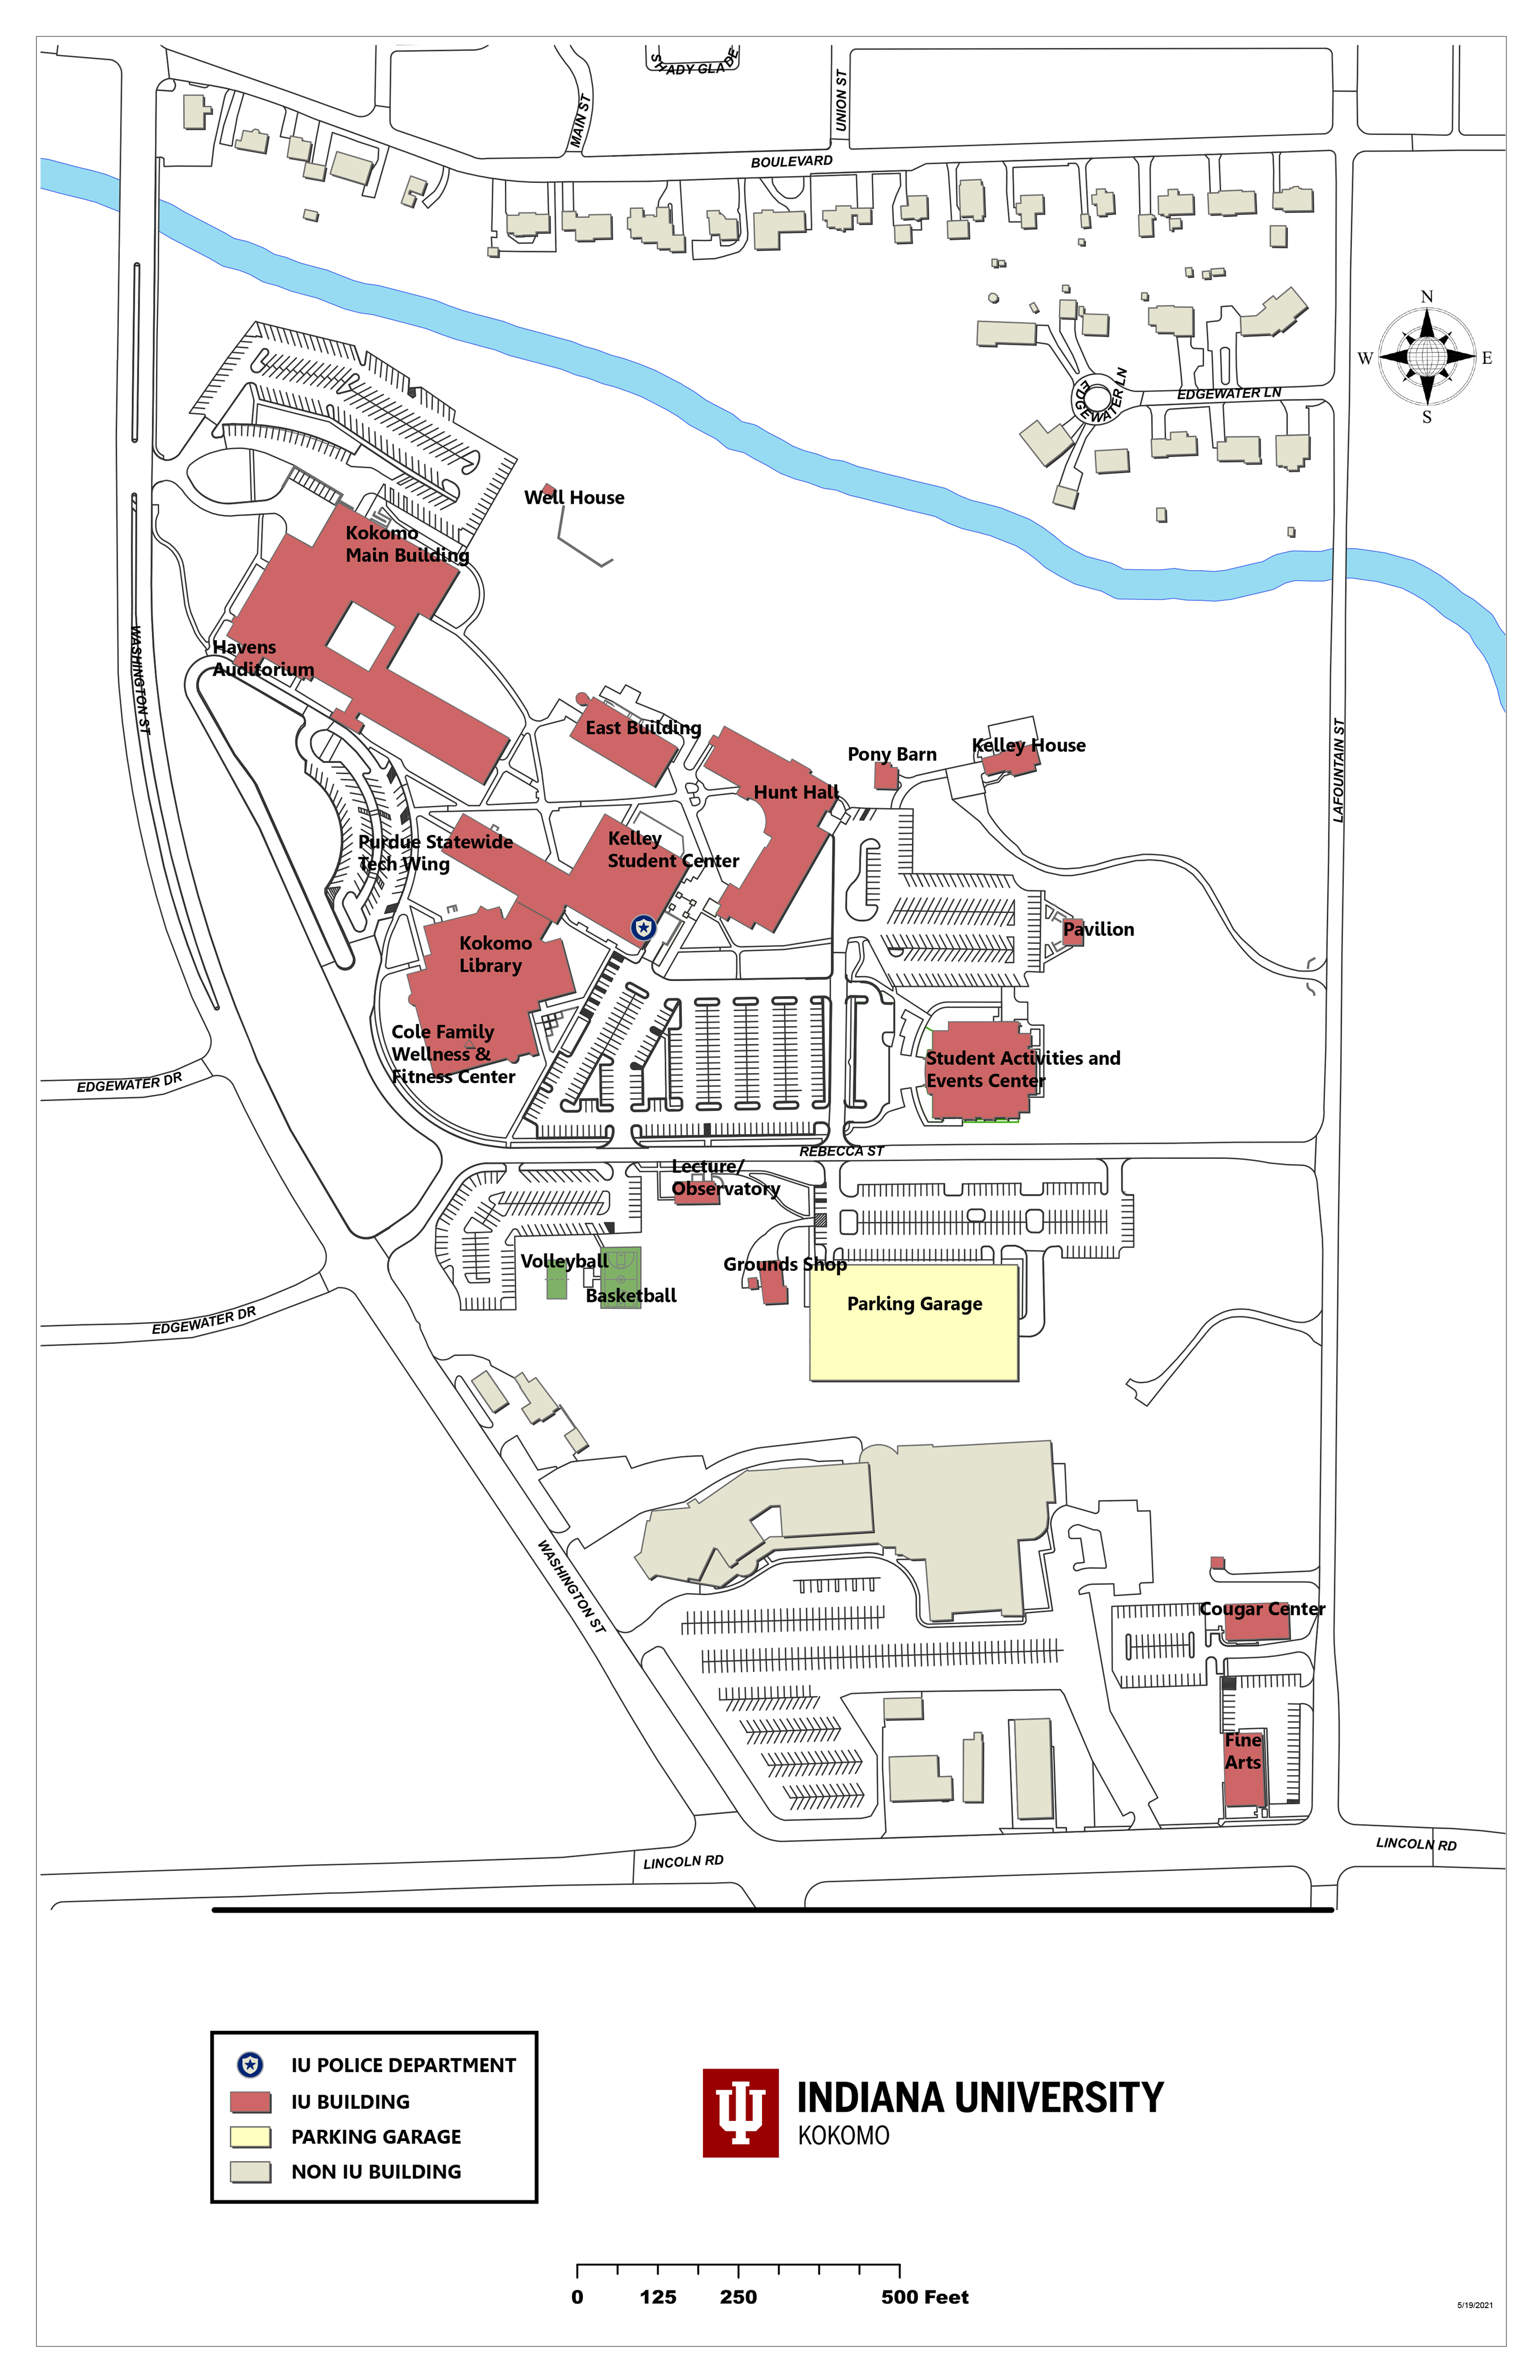 IUPUI Map: Campus Maps: Indiana University